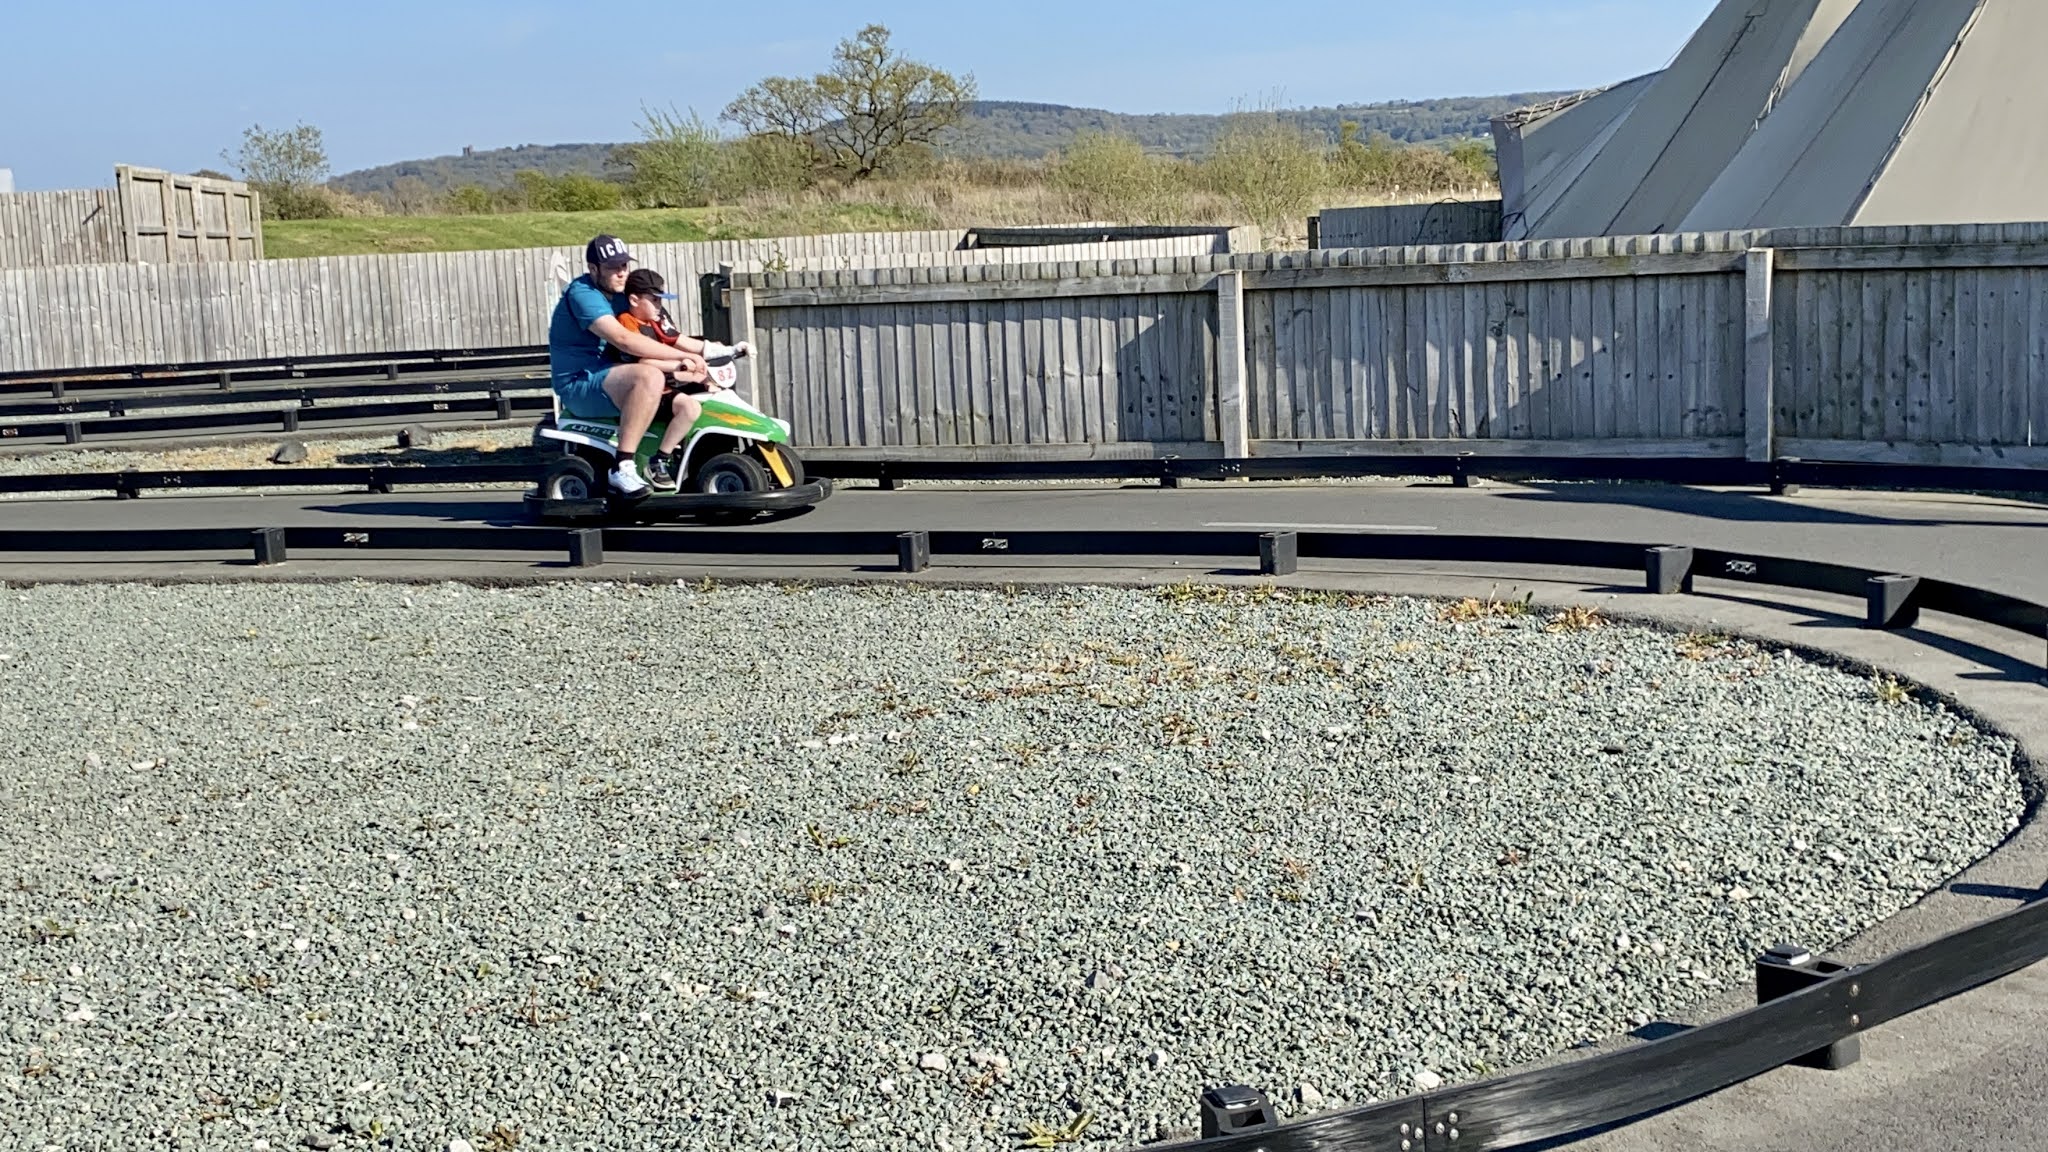 two boys on a quad bike